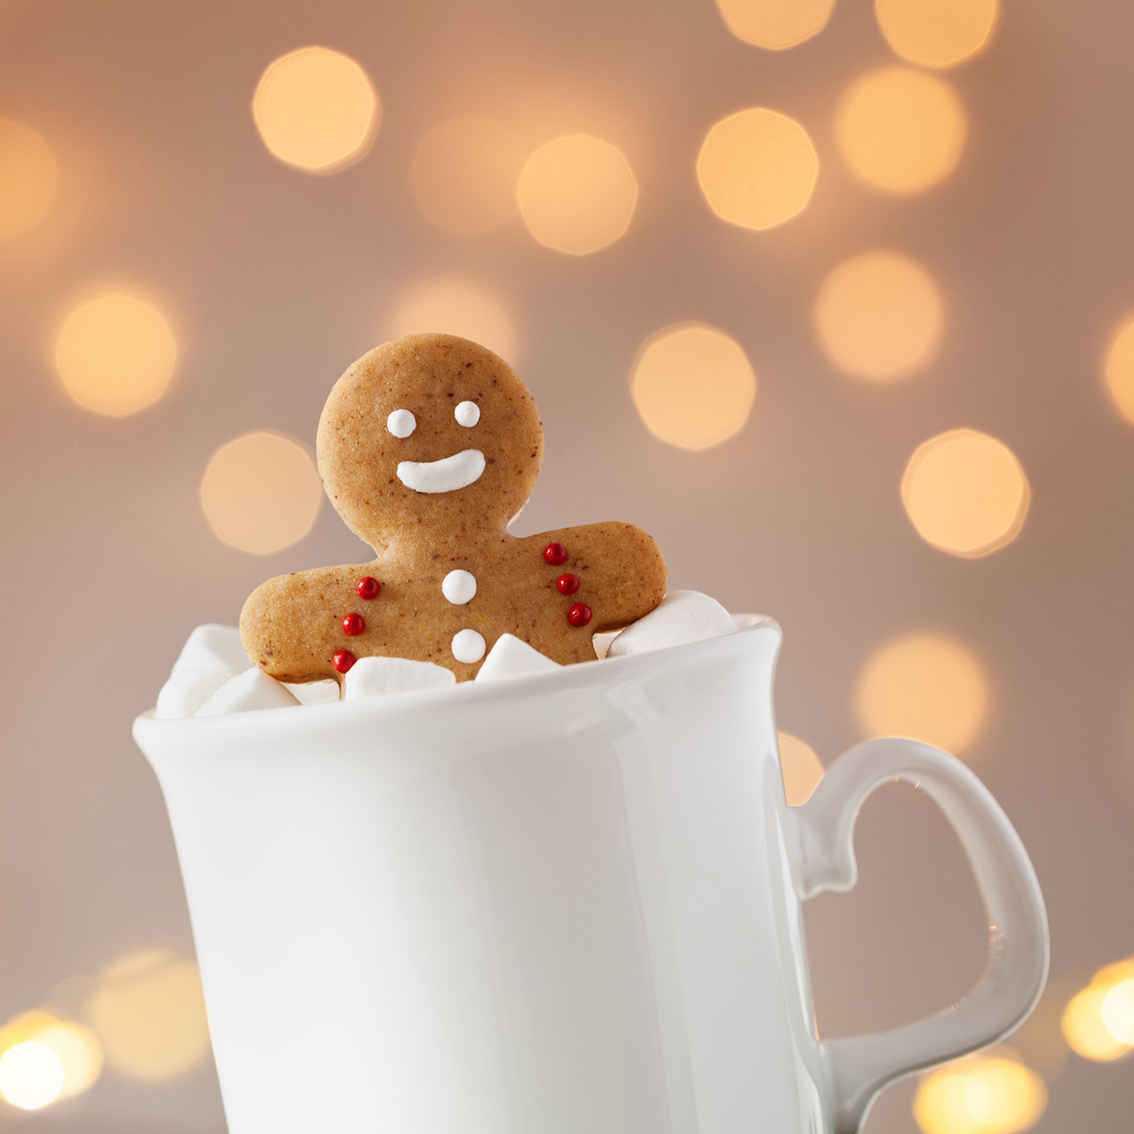 Gingerbread in a mug